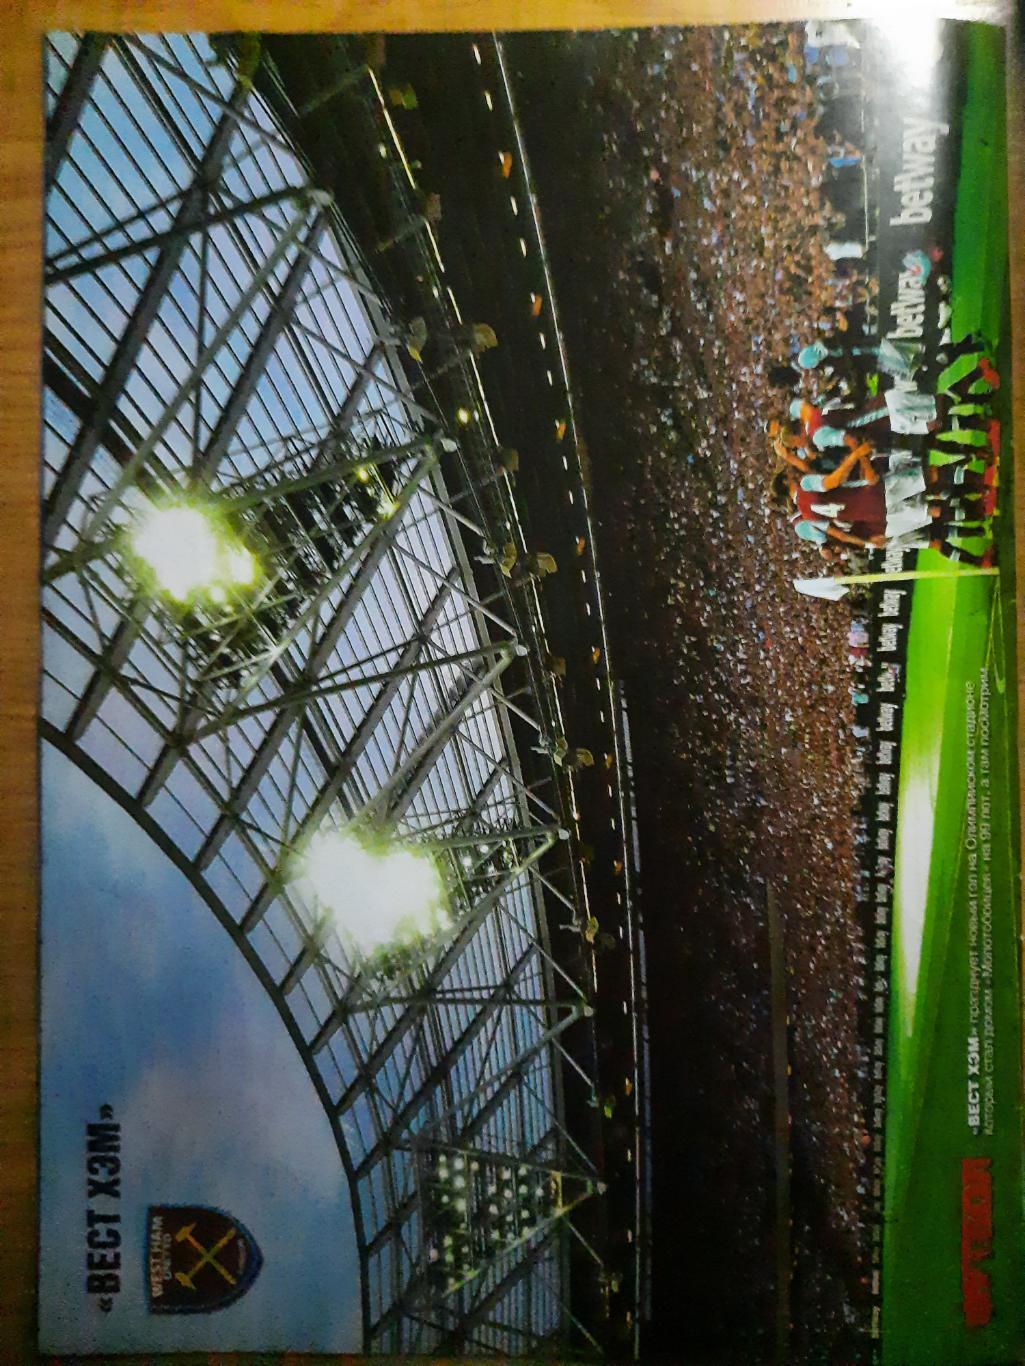 постер из еженедельника Футбол #61 2016, Динамо К. 1